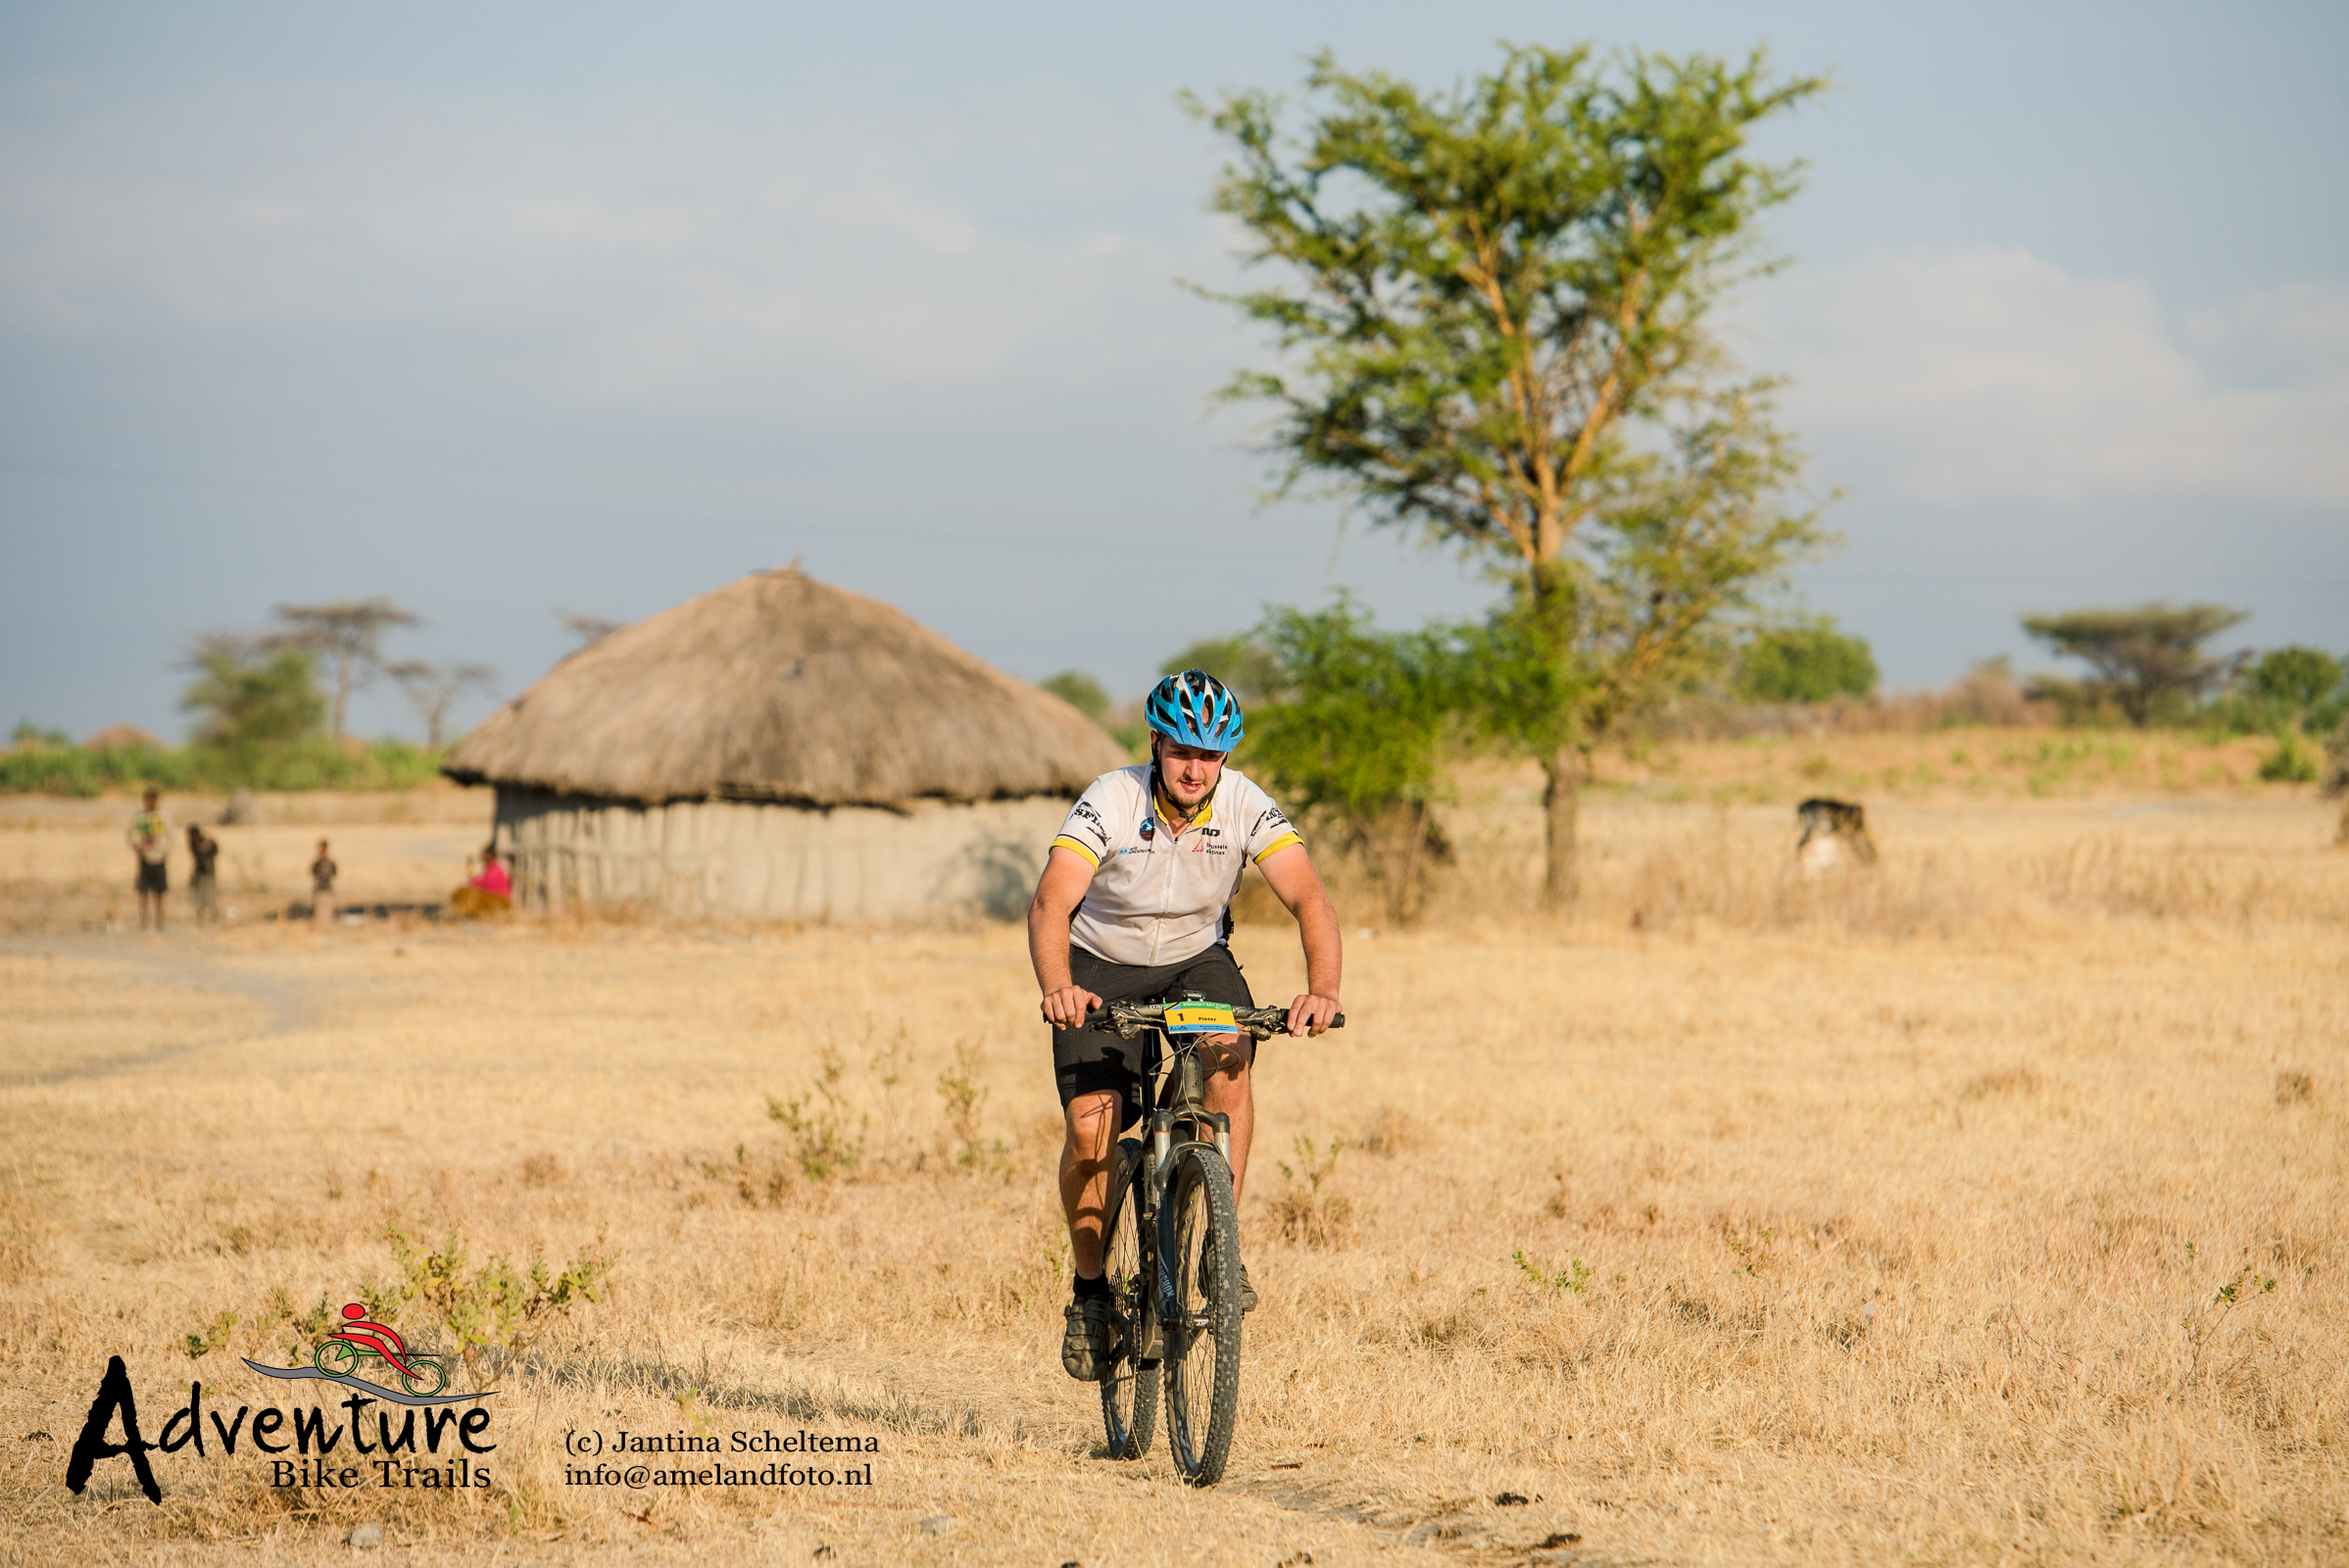 Rural tanzania, Adventure Bike Trails, cyclist, Adventure, real stuff